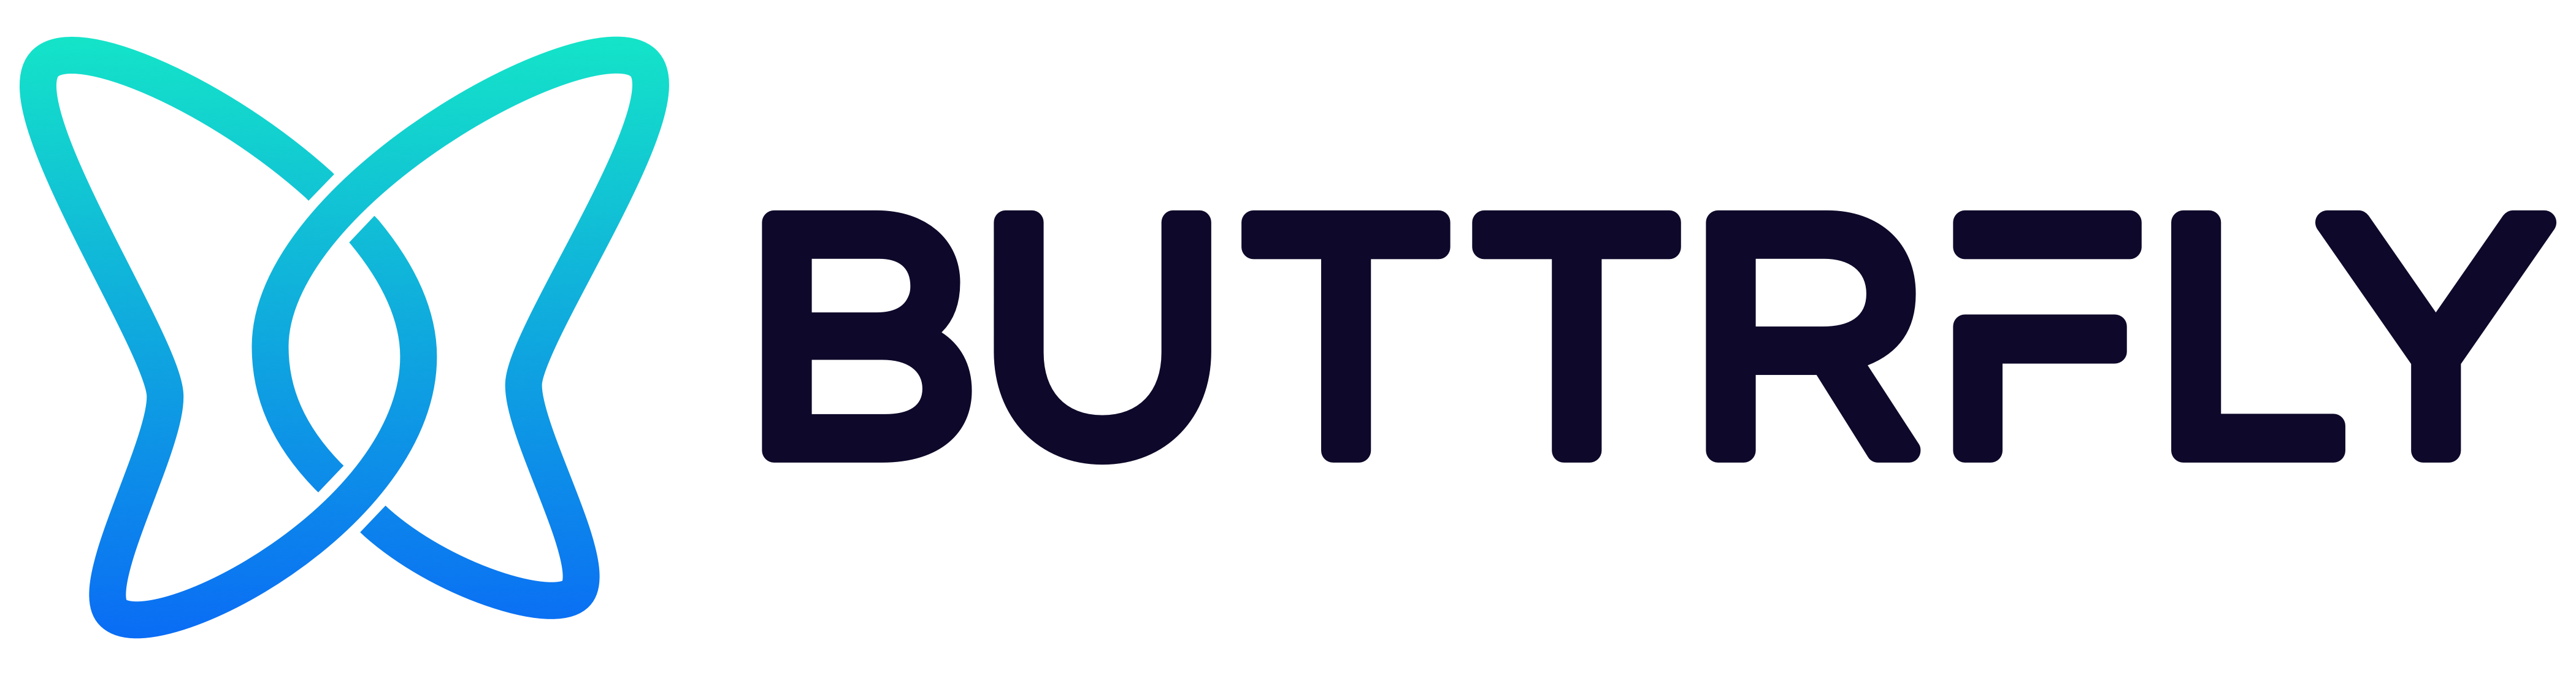 Buttrfly